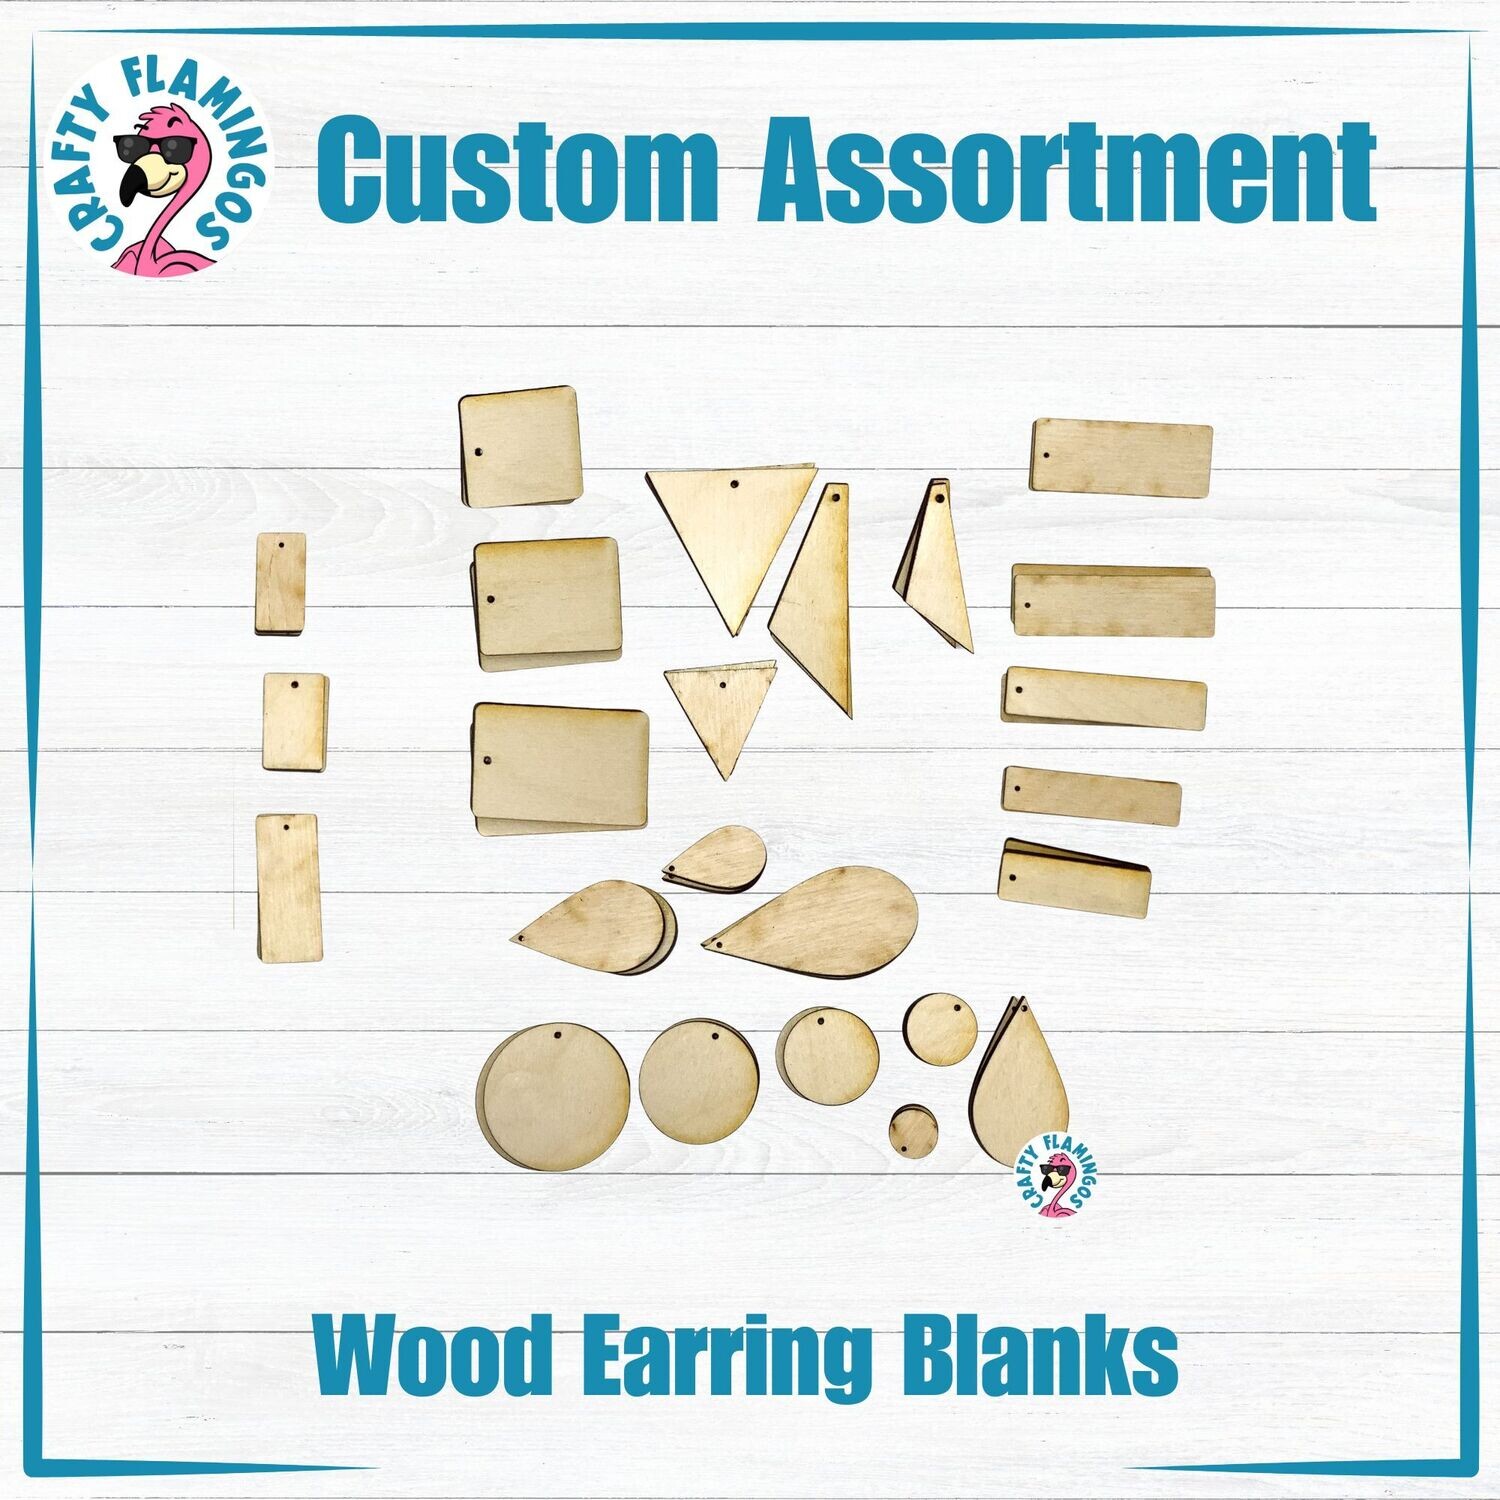 Custom Assortment Wood Earring Blanks for Jewelry Making